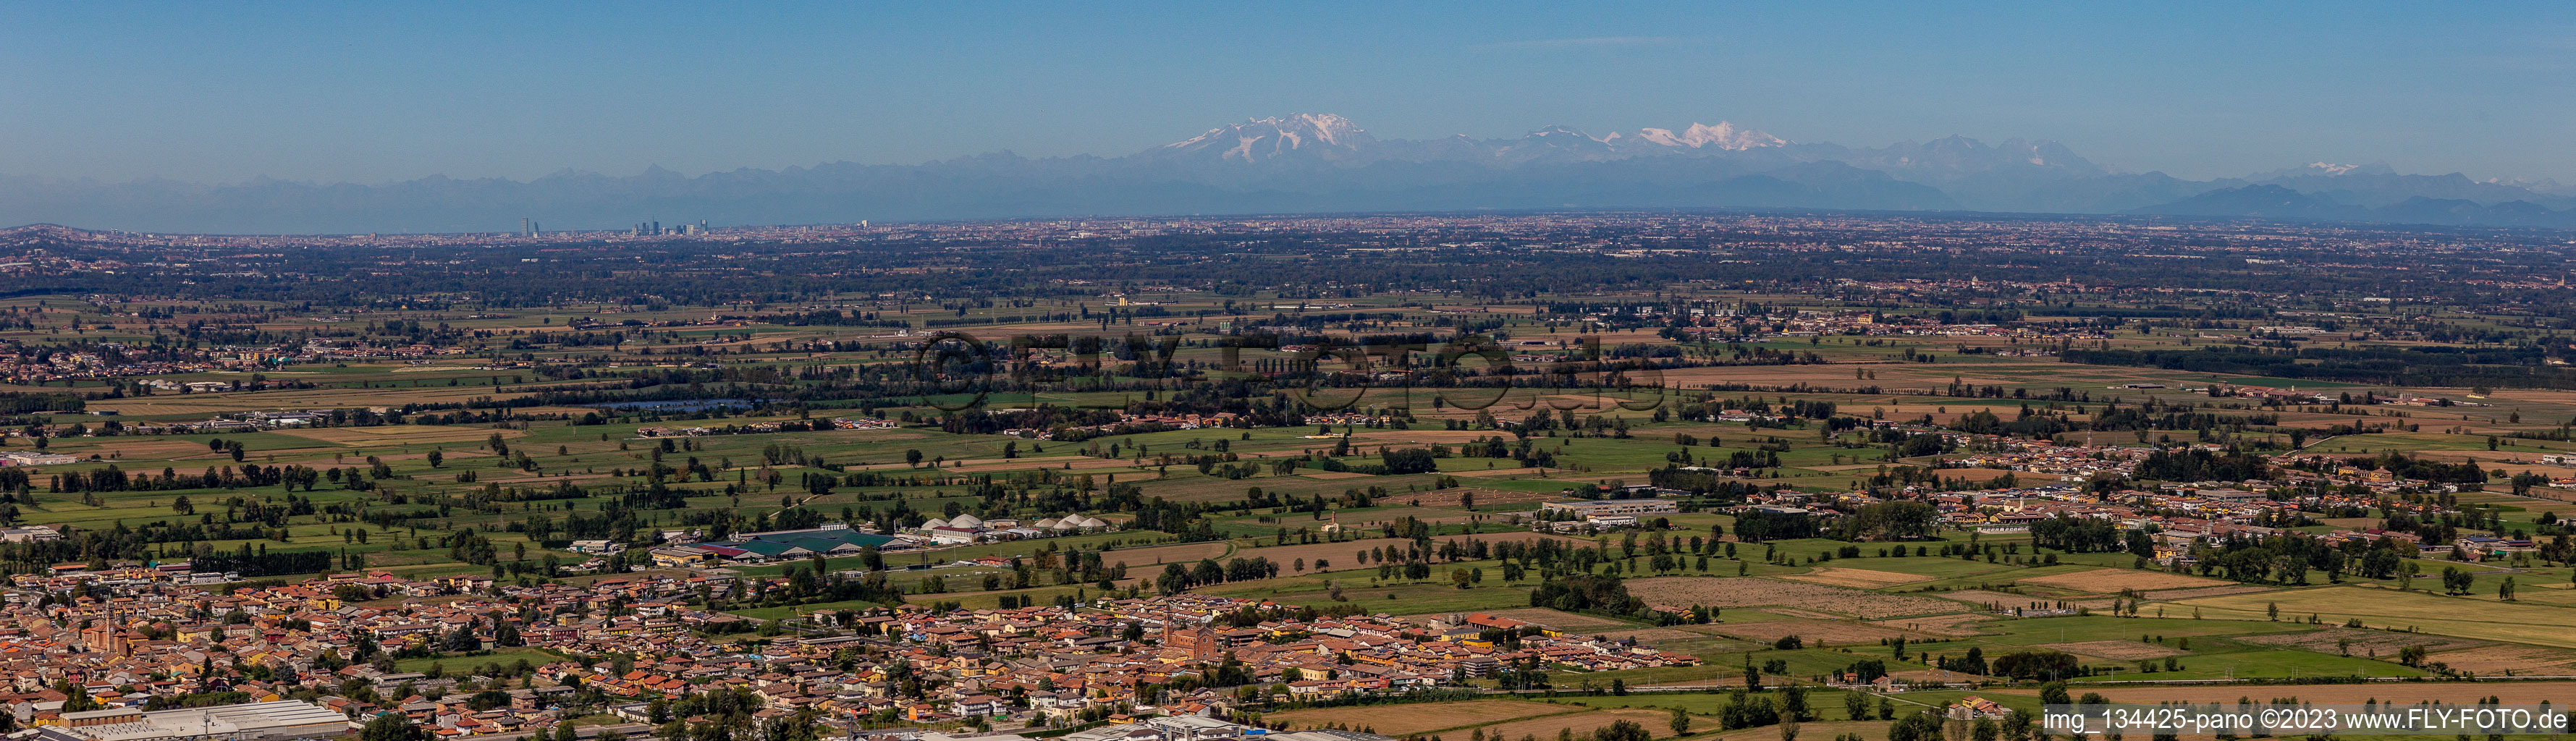 Panorama in Trescore Cremasco im Bundesland Cremona, Italien